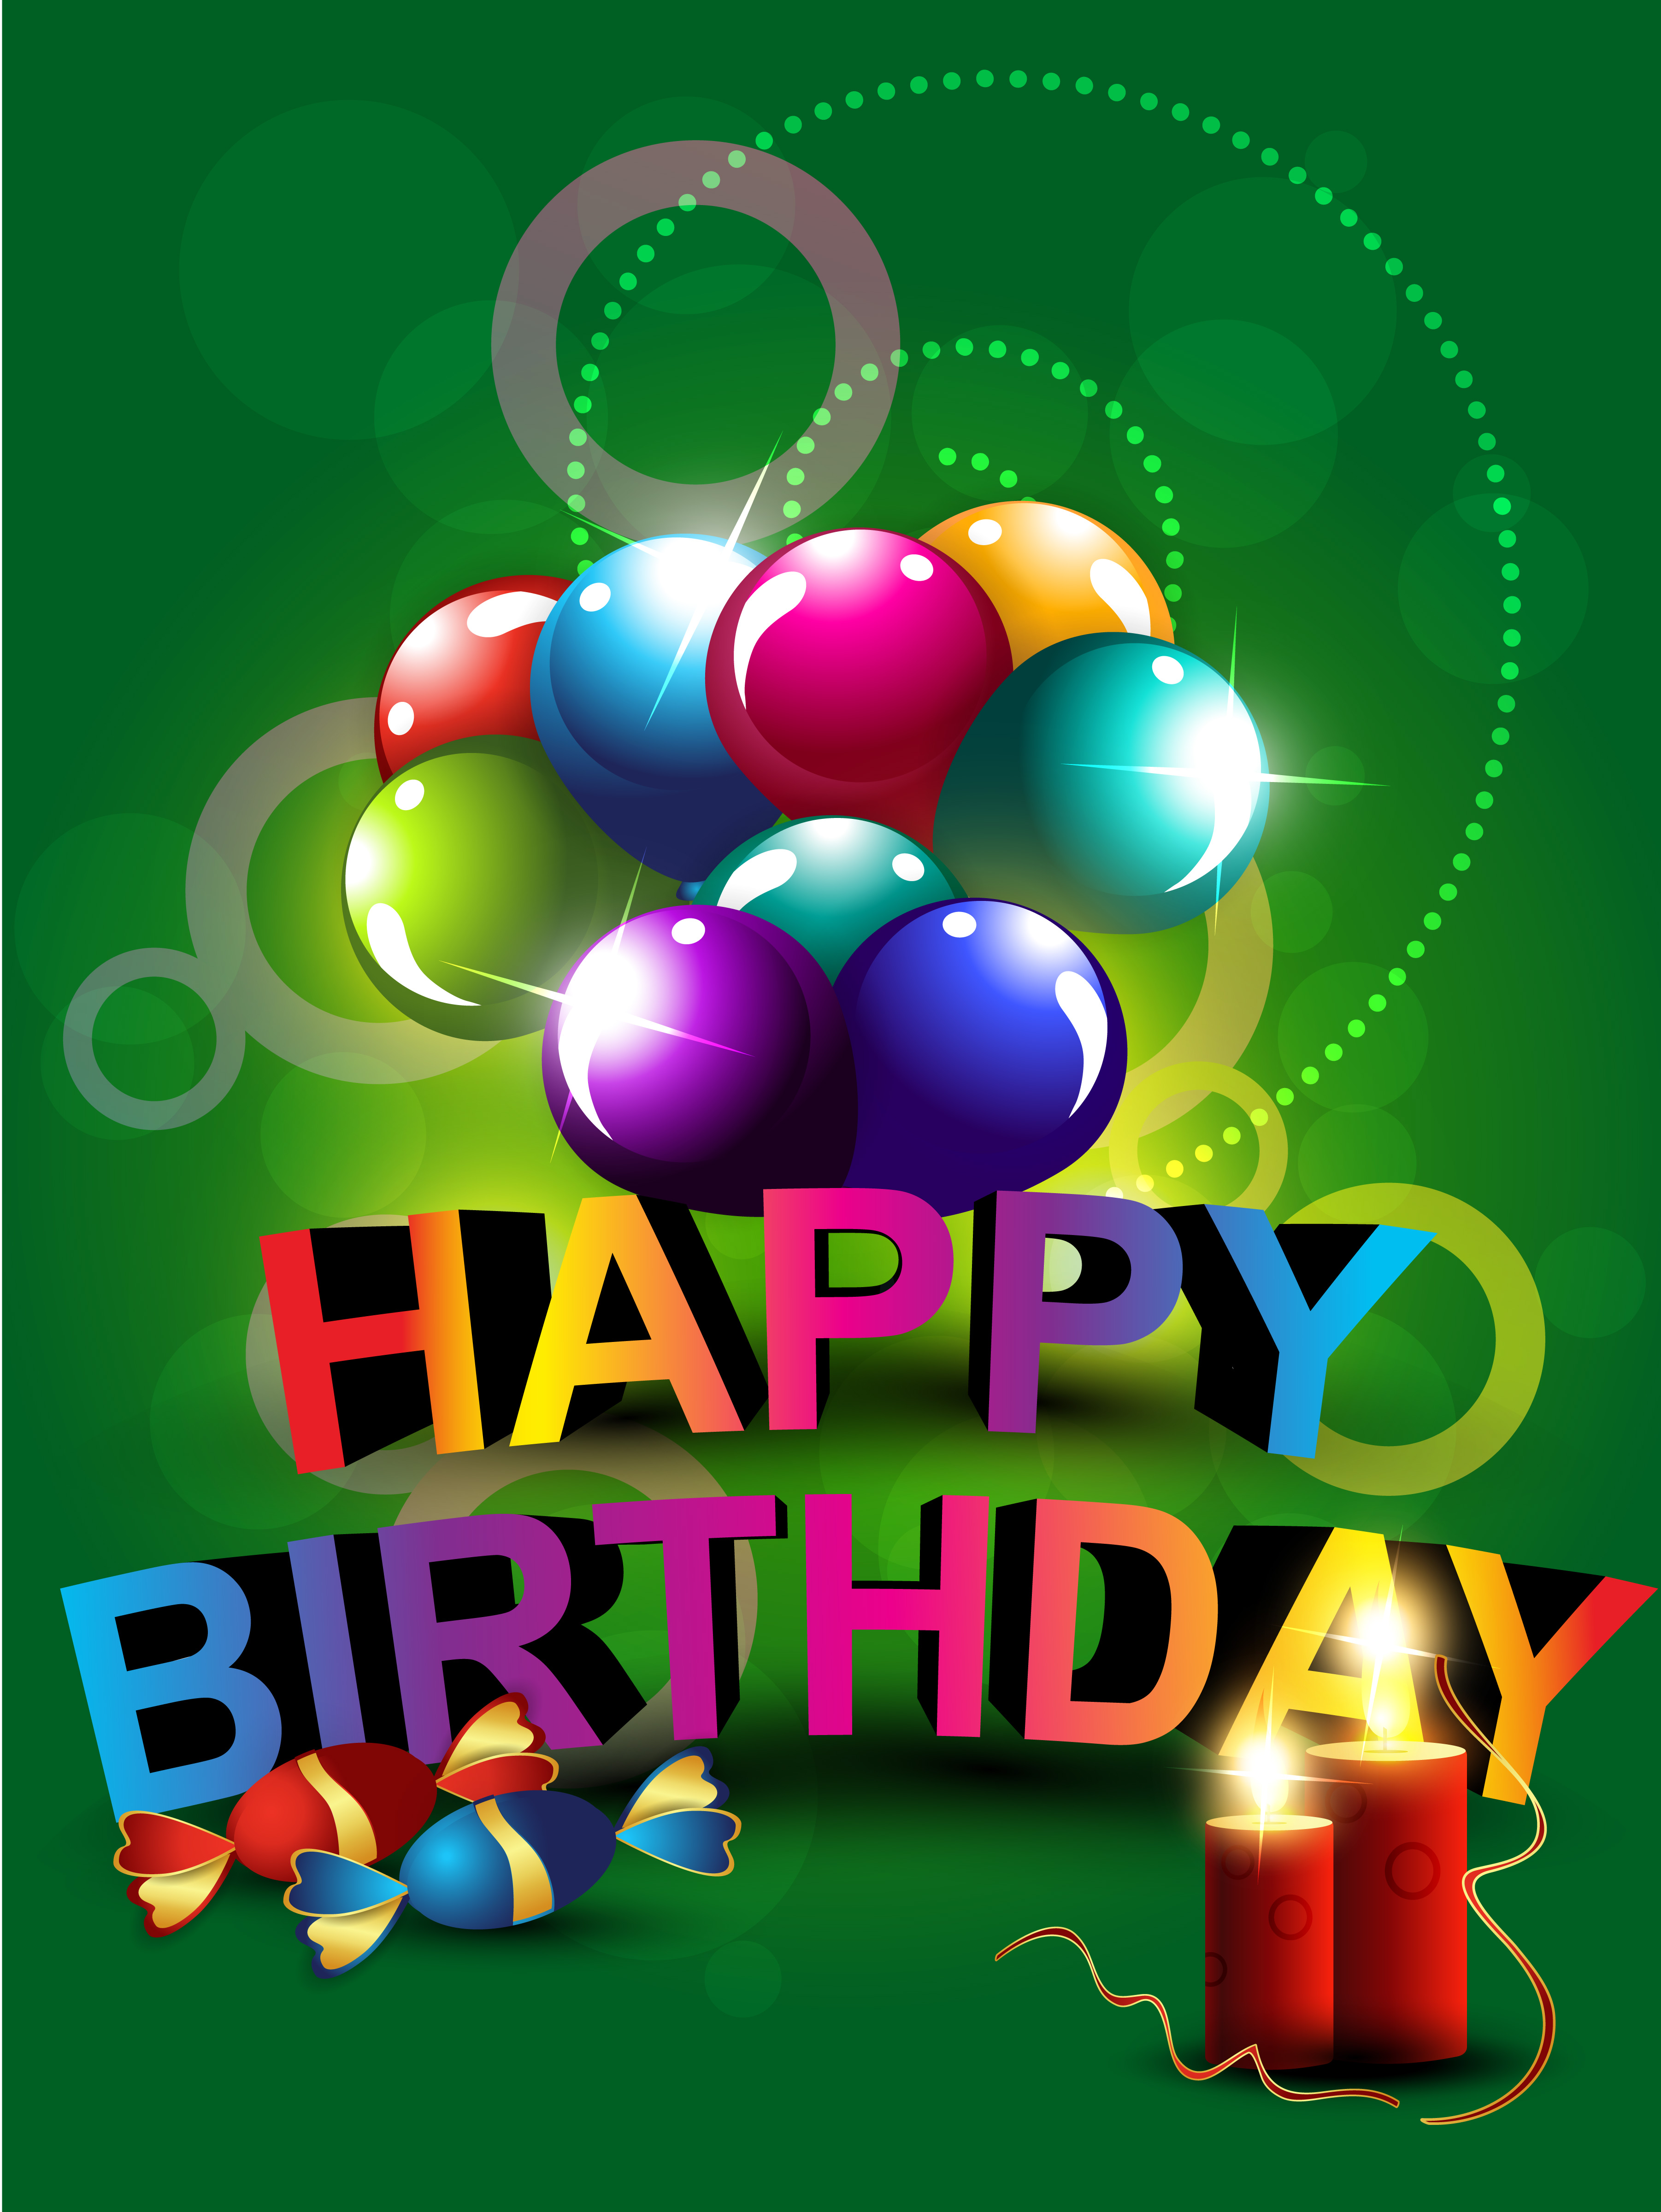 happy birthday 458941 - Download Free Vectors, Clipart Graphics & Vector Art